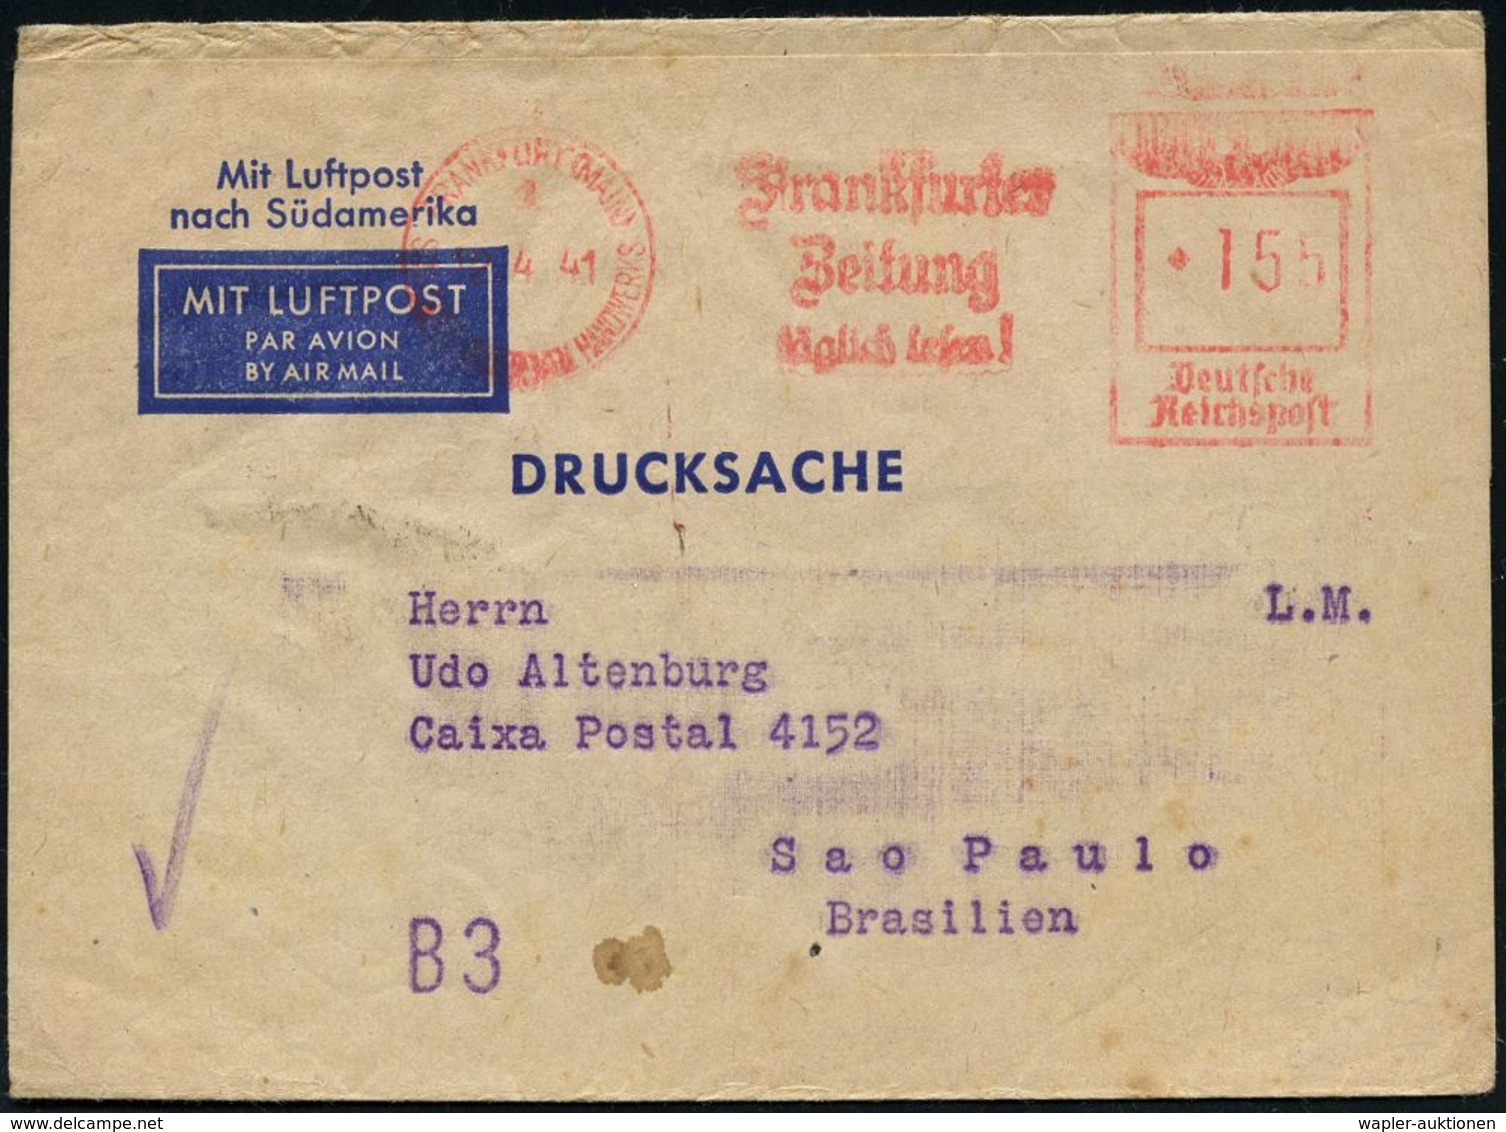 FLUG- & KATAPULTPOST SÜDAMERIKA : FRANKFURT (MAIN)1/ SDH/ Frankfurter/ Zeitung/ Täglich Lesen! 1941 (Apr.) AFS 155 Pf. A - Other (Air)